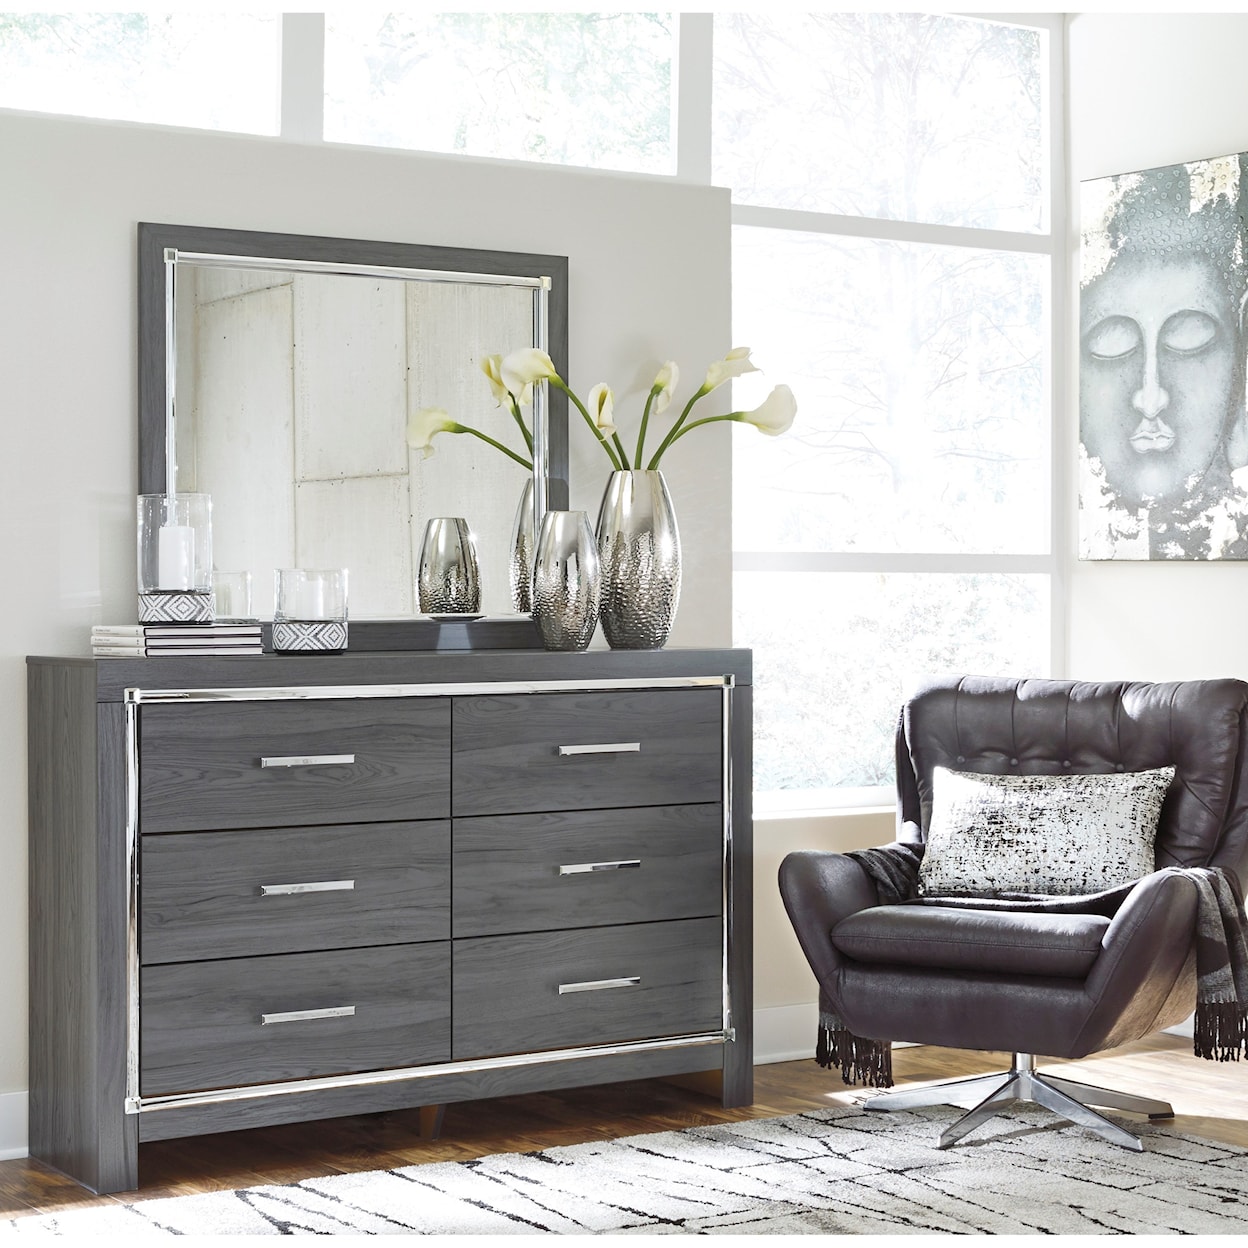 Signature Design by Ashley Furniture Lodanna Dresser and Mirror Set